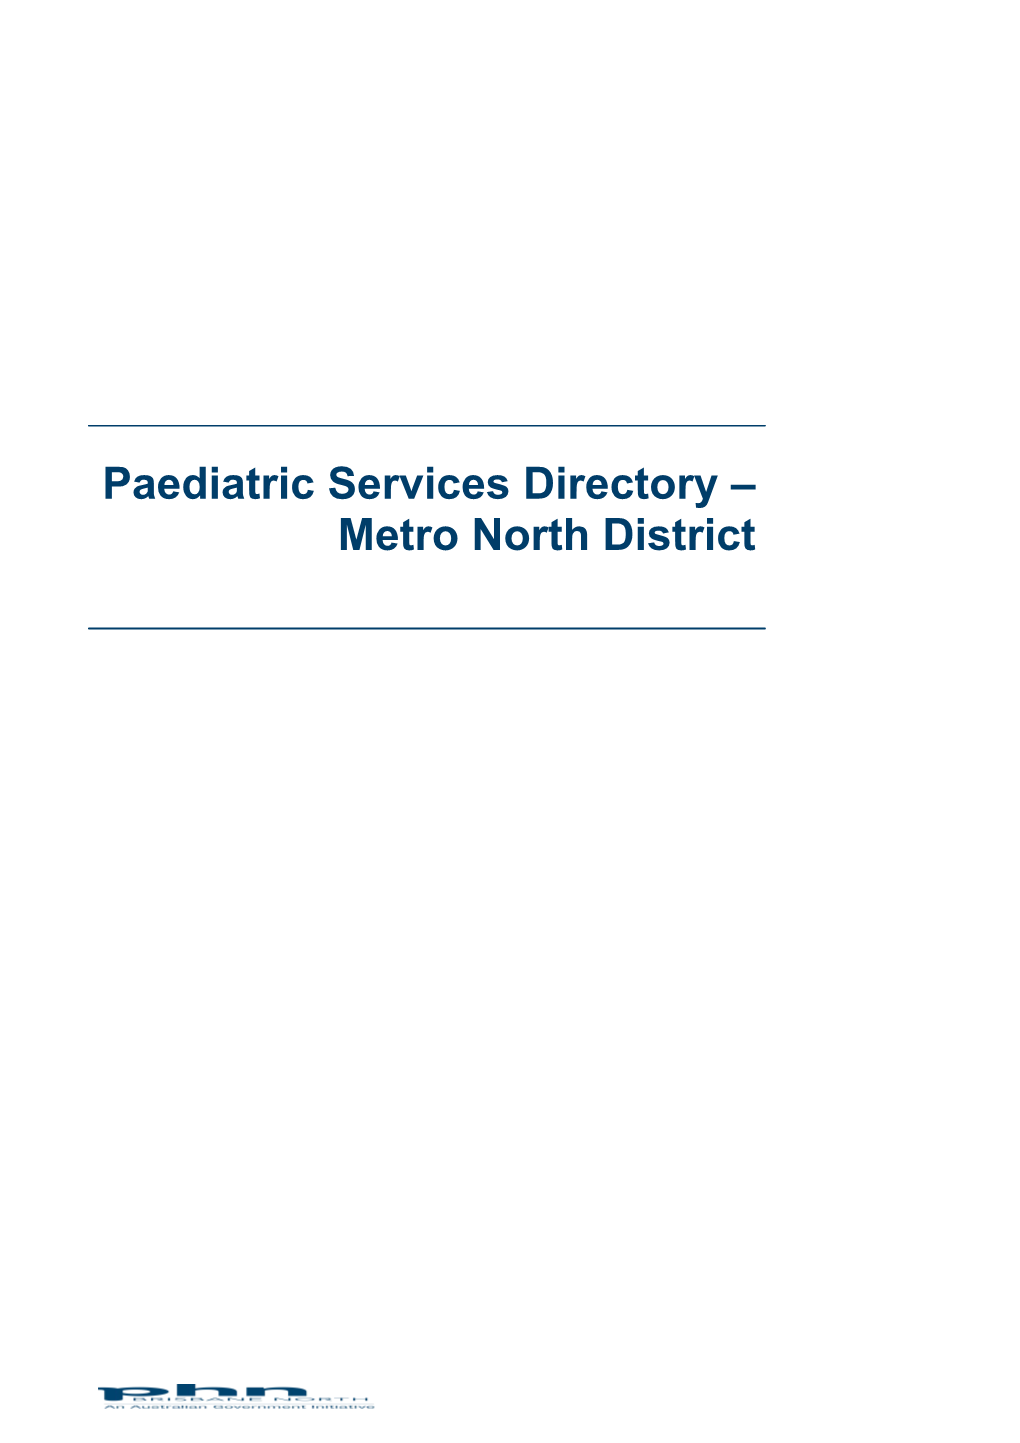 Paediatric Services Directory Metro North District